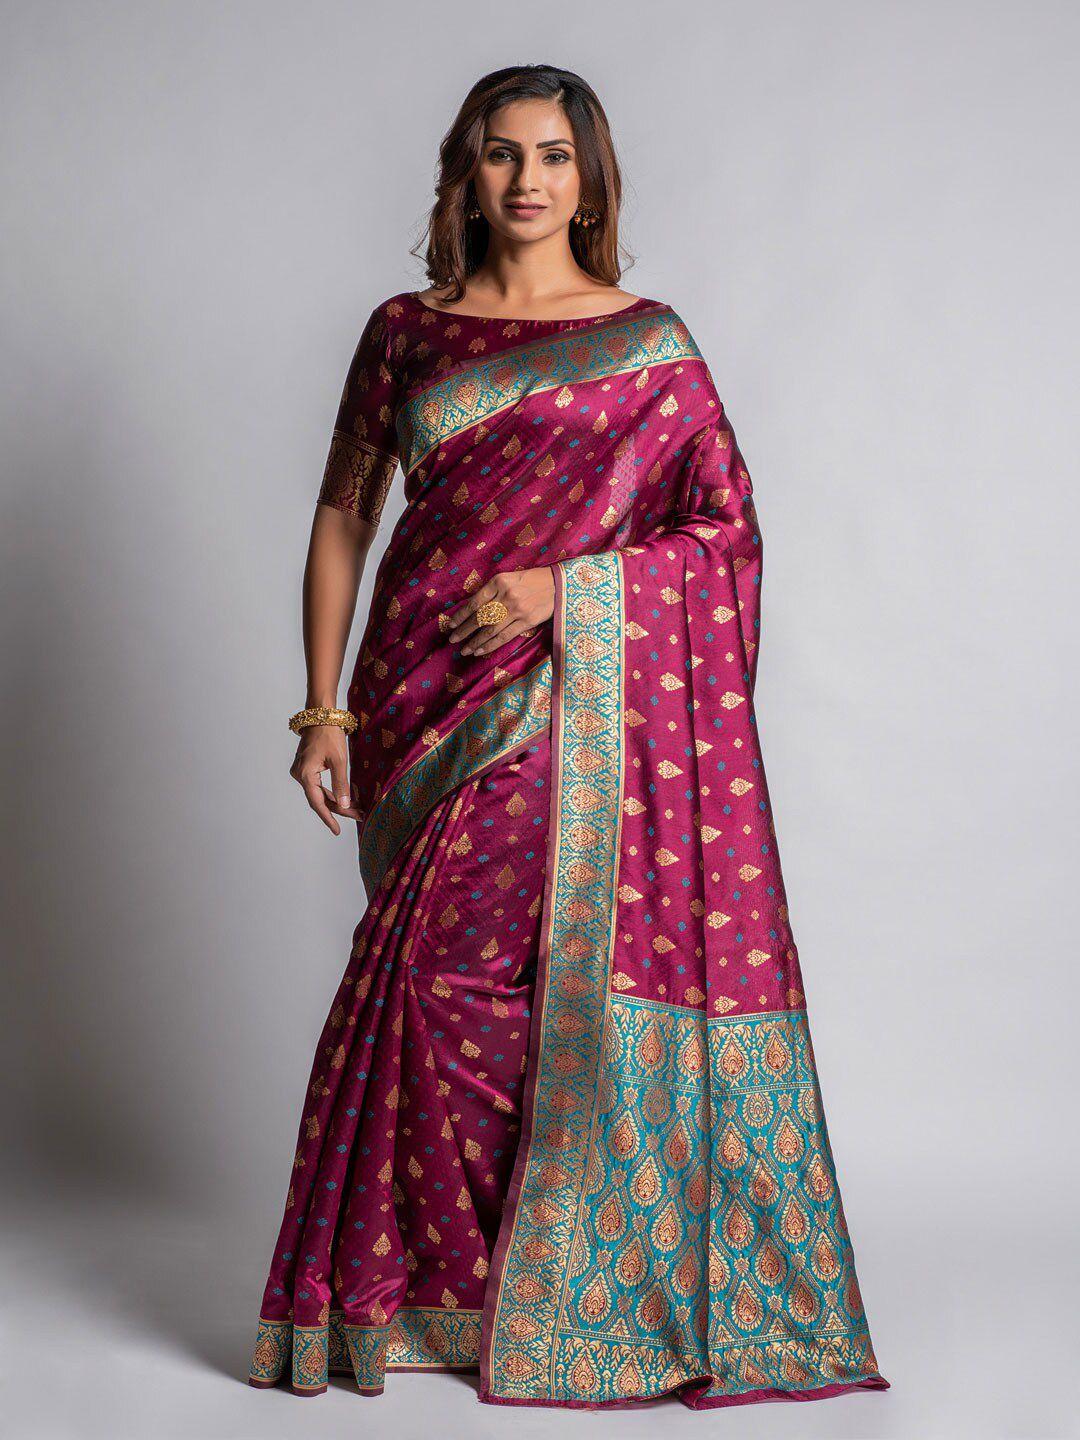 lilots burgundy & blue ethnic motifs woven design kota saree